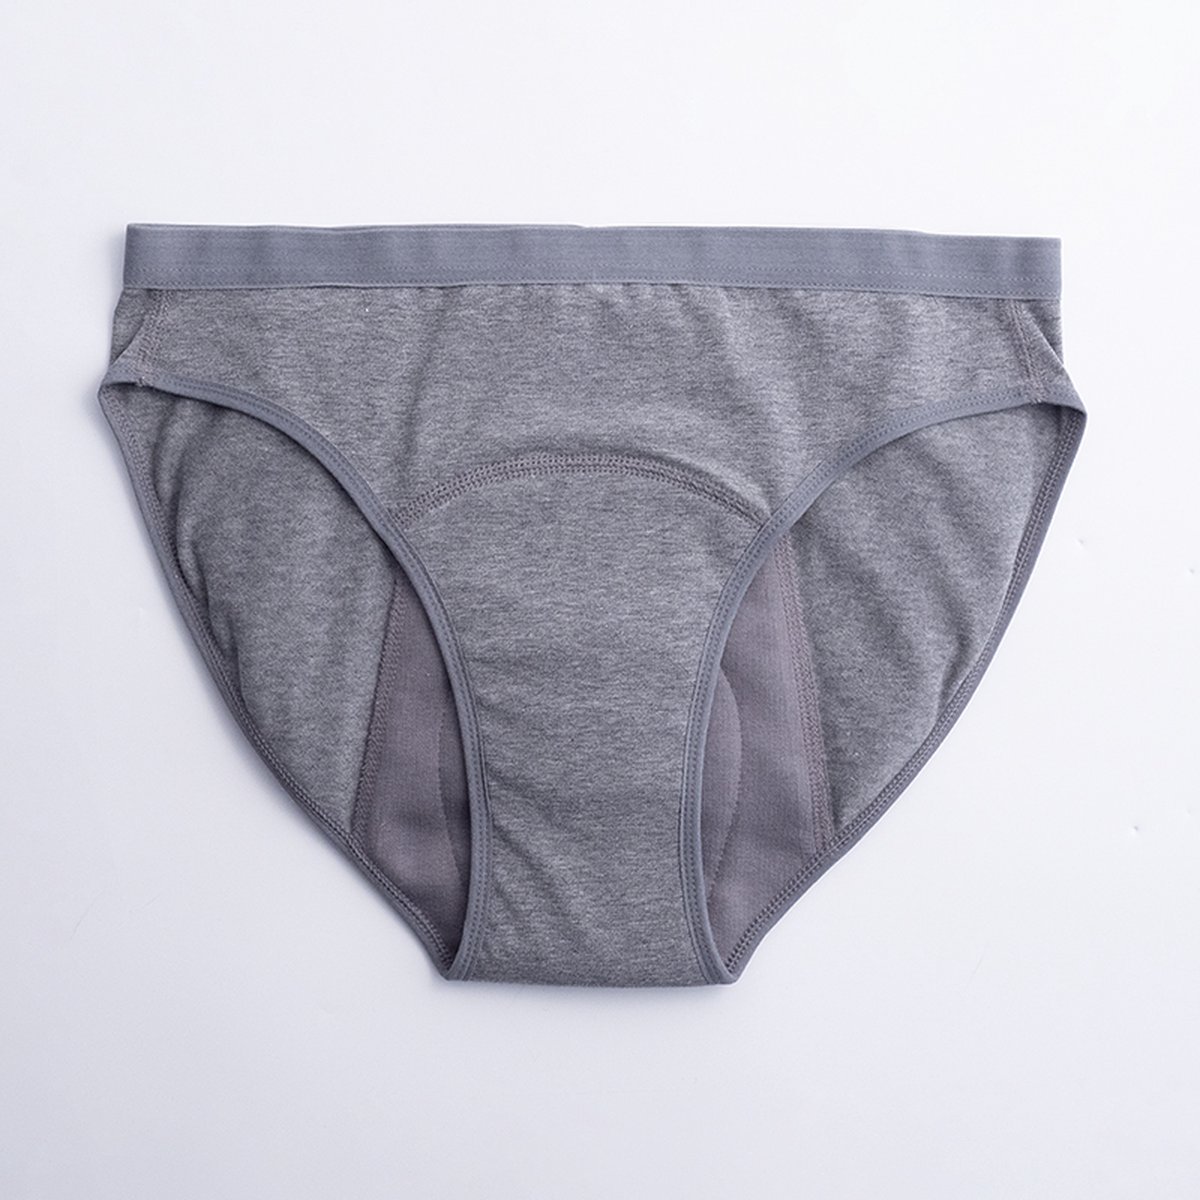 ImseVimse - Imse - menstruatieondergoed - Bikini model period underwear - hevige menstruatie - L - eur 44/46 - grijs